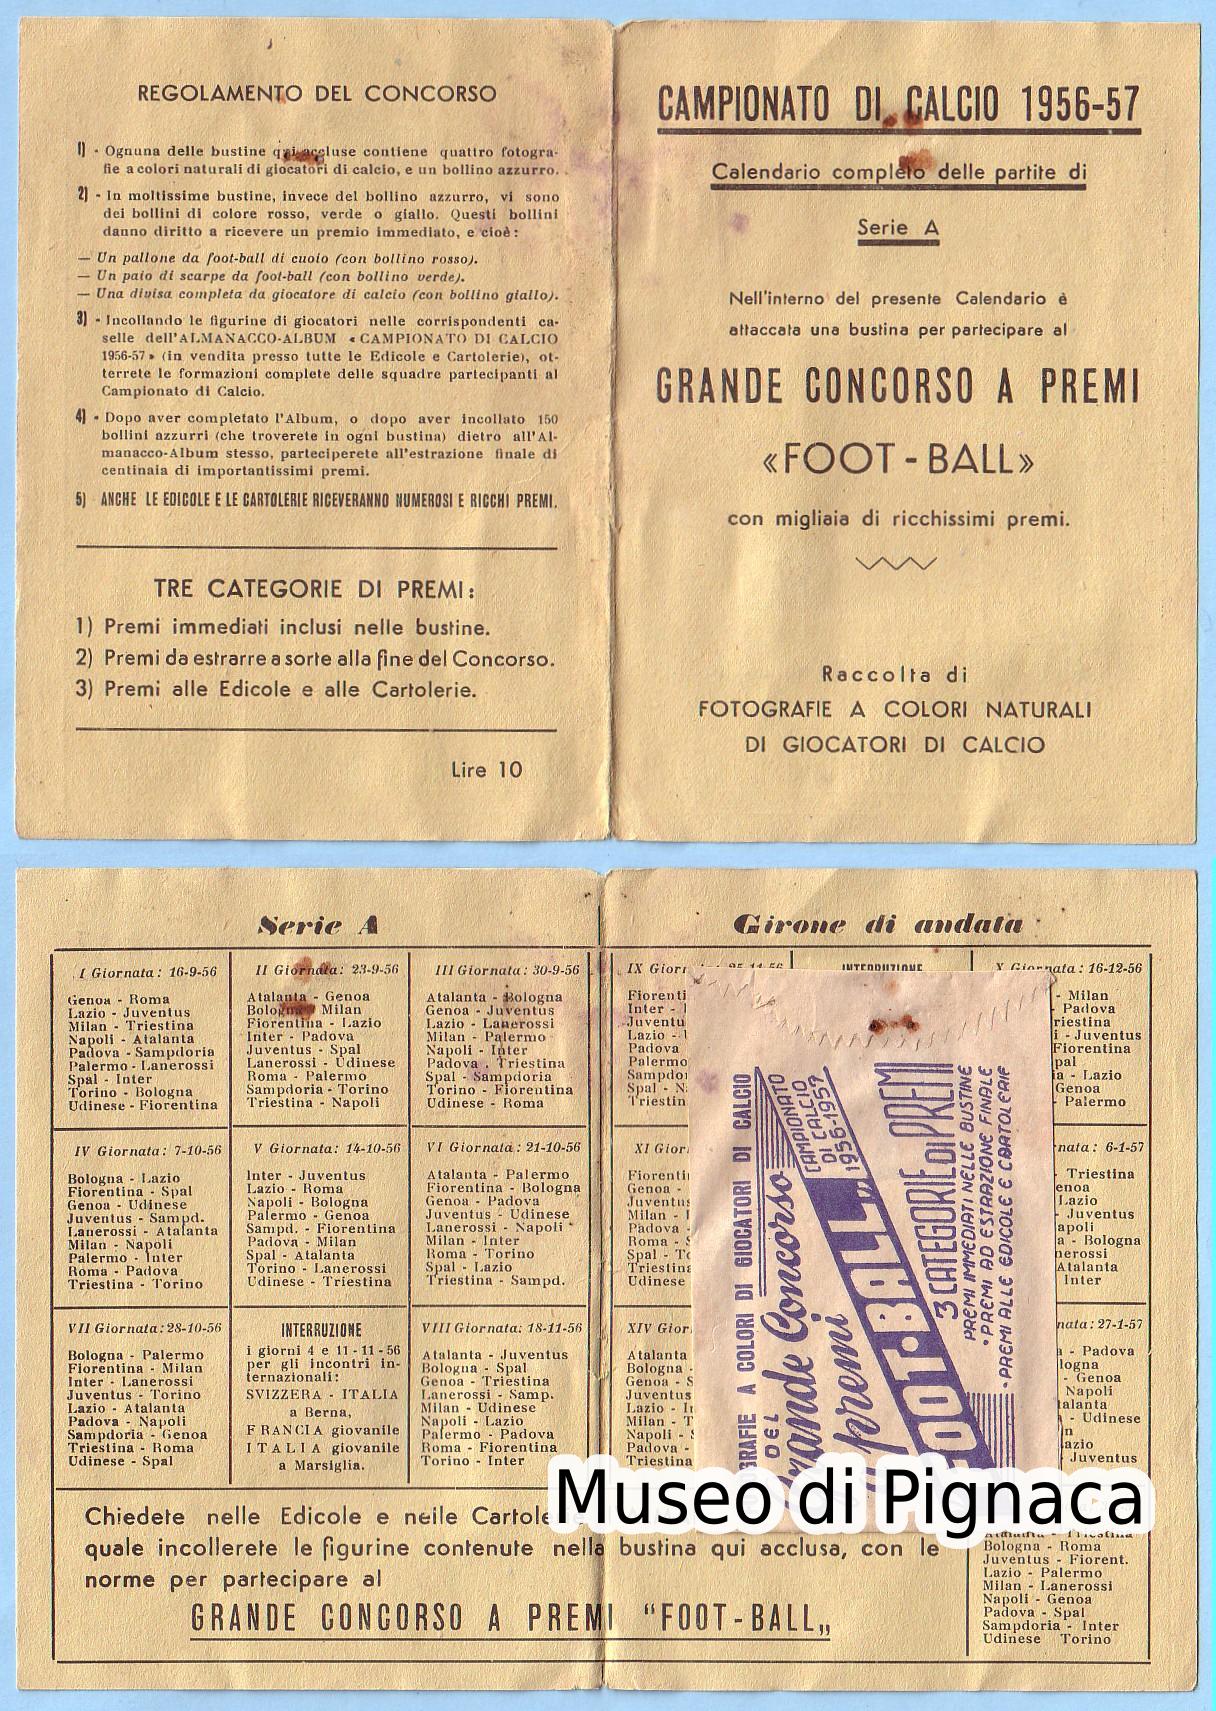 SPORT NAPOLI 1956-57 - Bustina e calendario-regolamento 'FOOT-BALL Campionato di Calcio 1956-57'